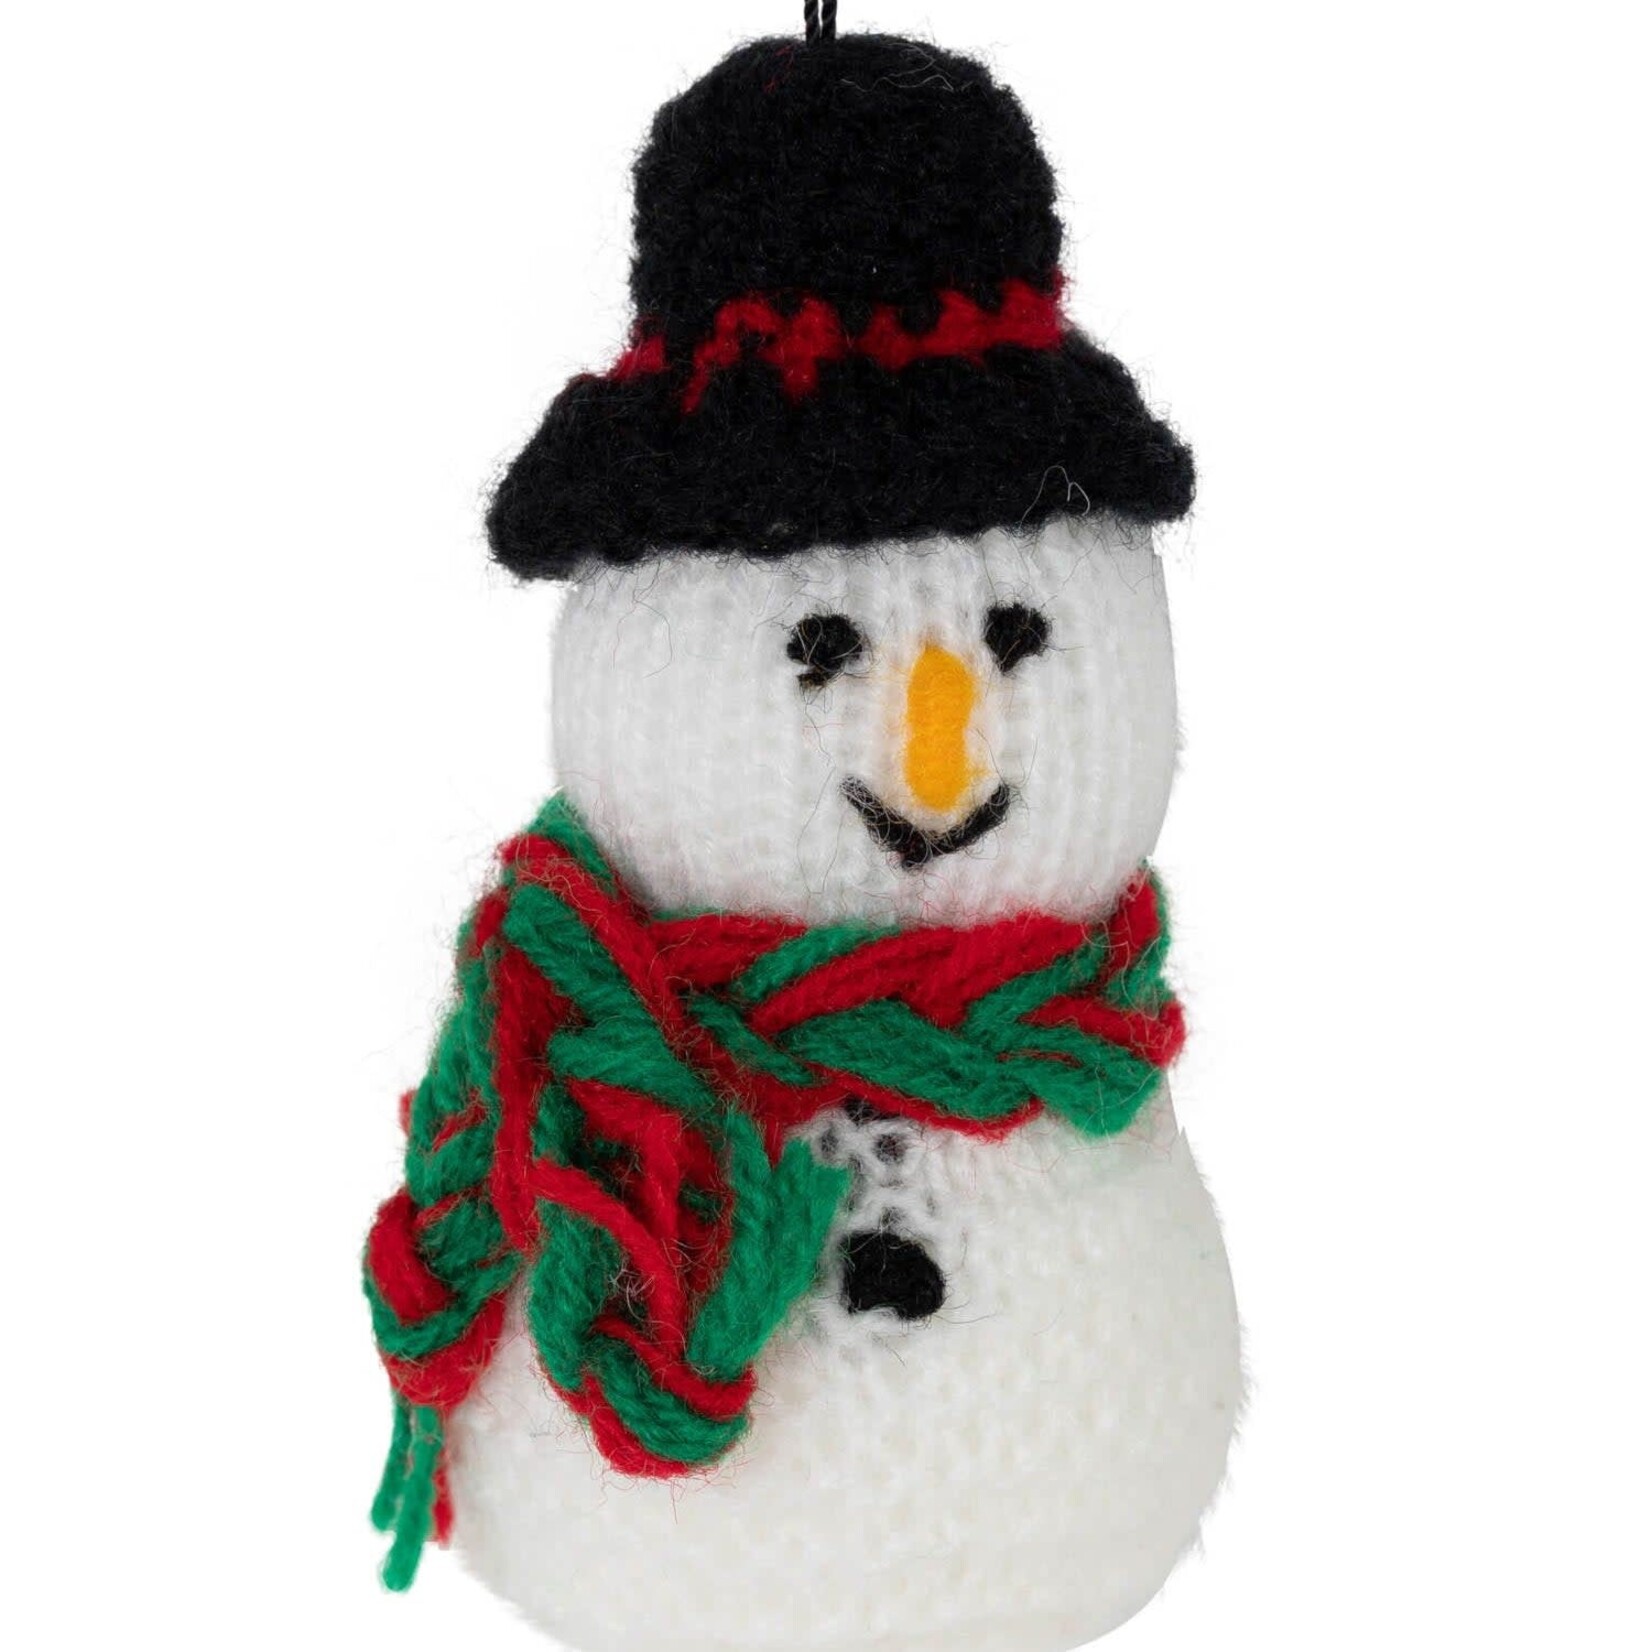 Ten Thousand Villages USA Yarn Snowman Ornament